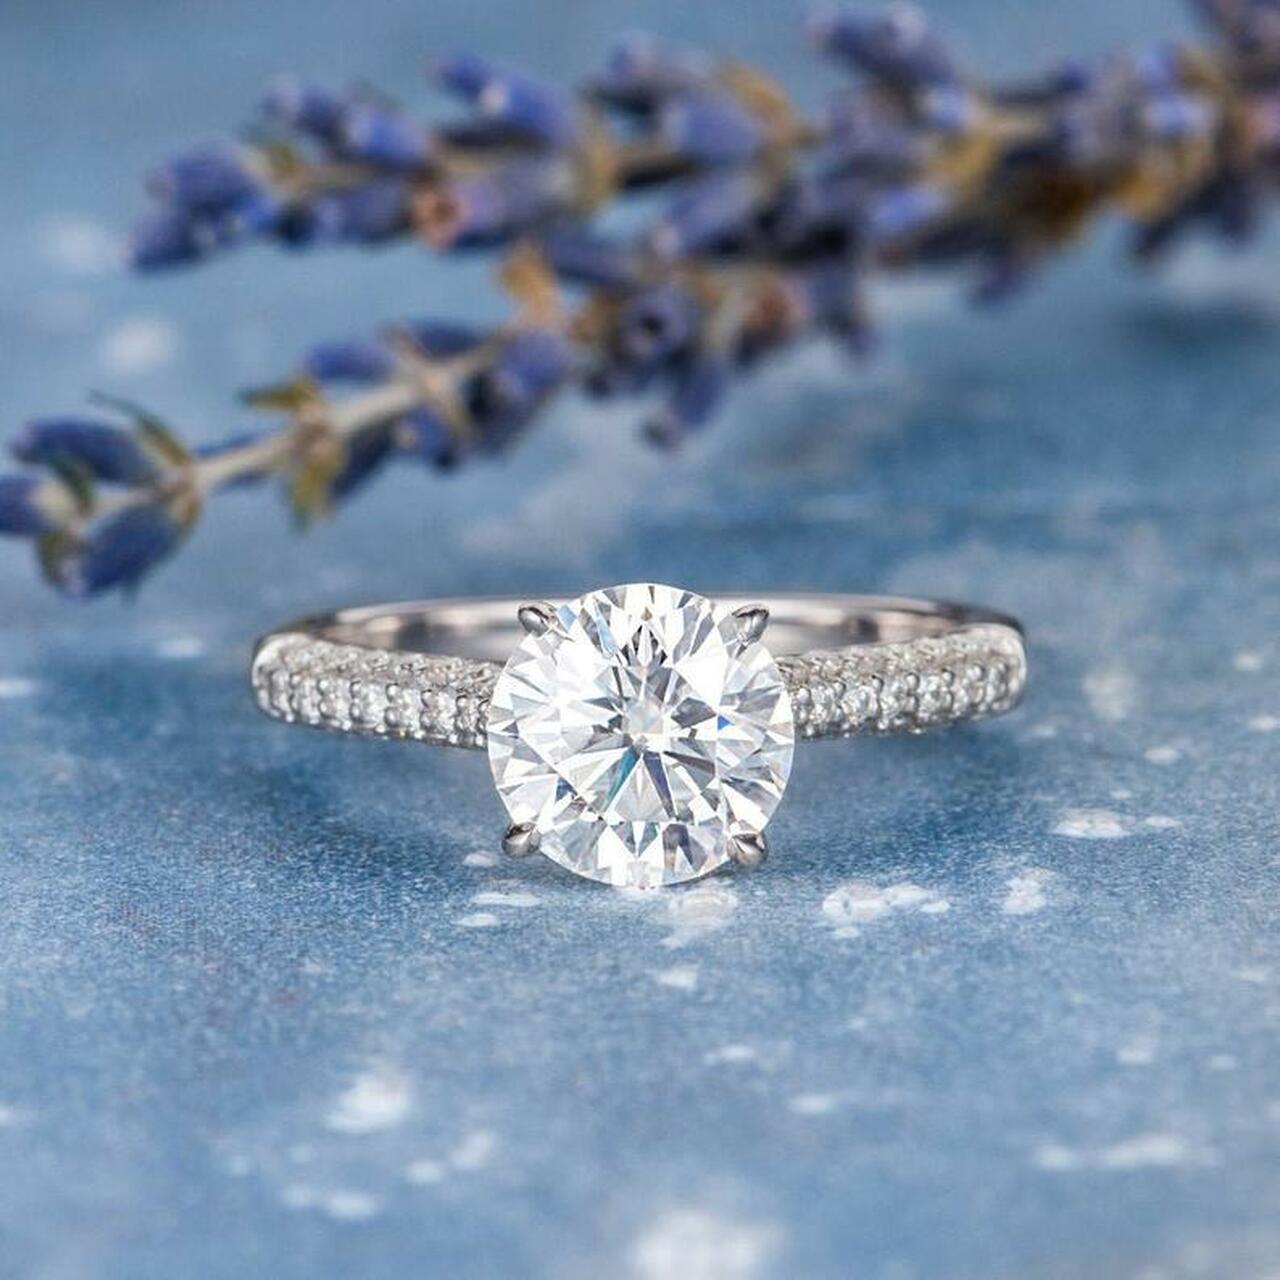 Picturesque Round Diamond Wedding Ring